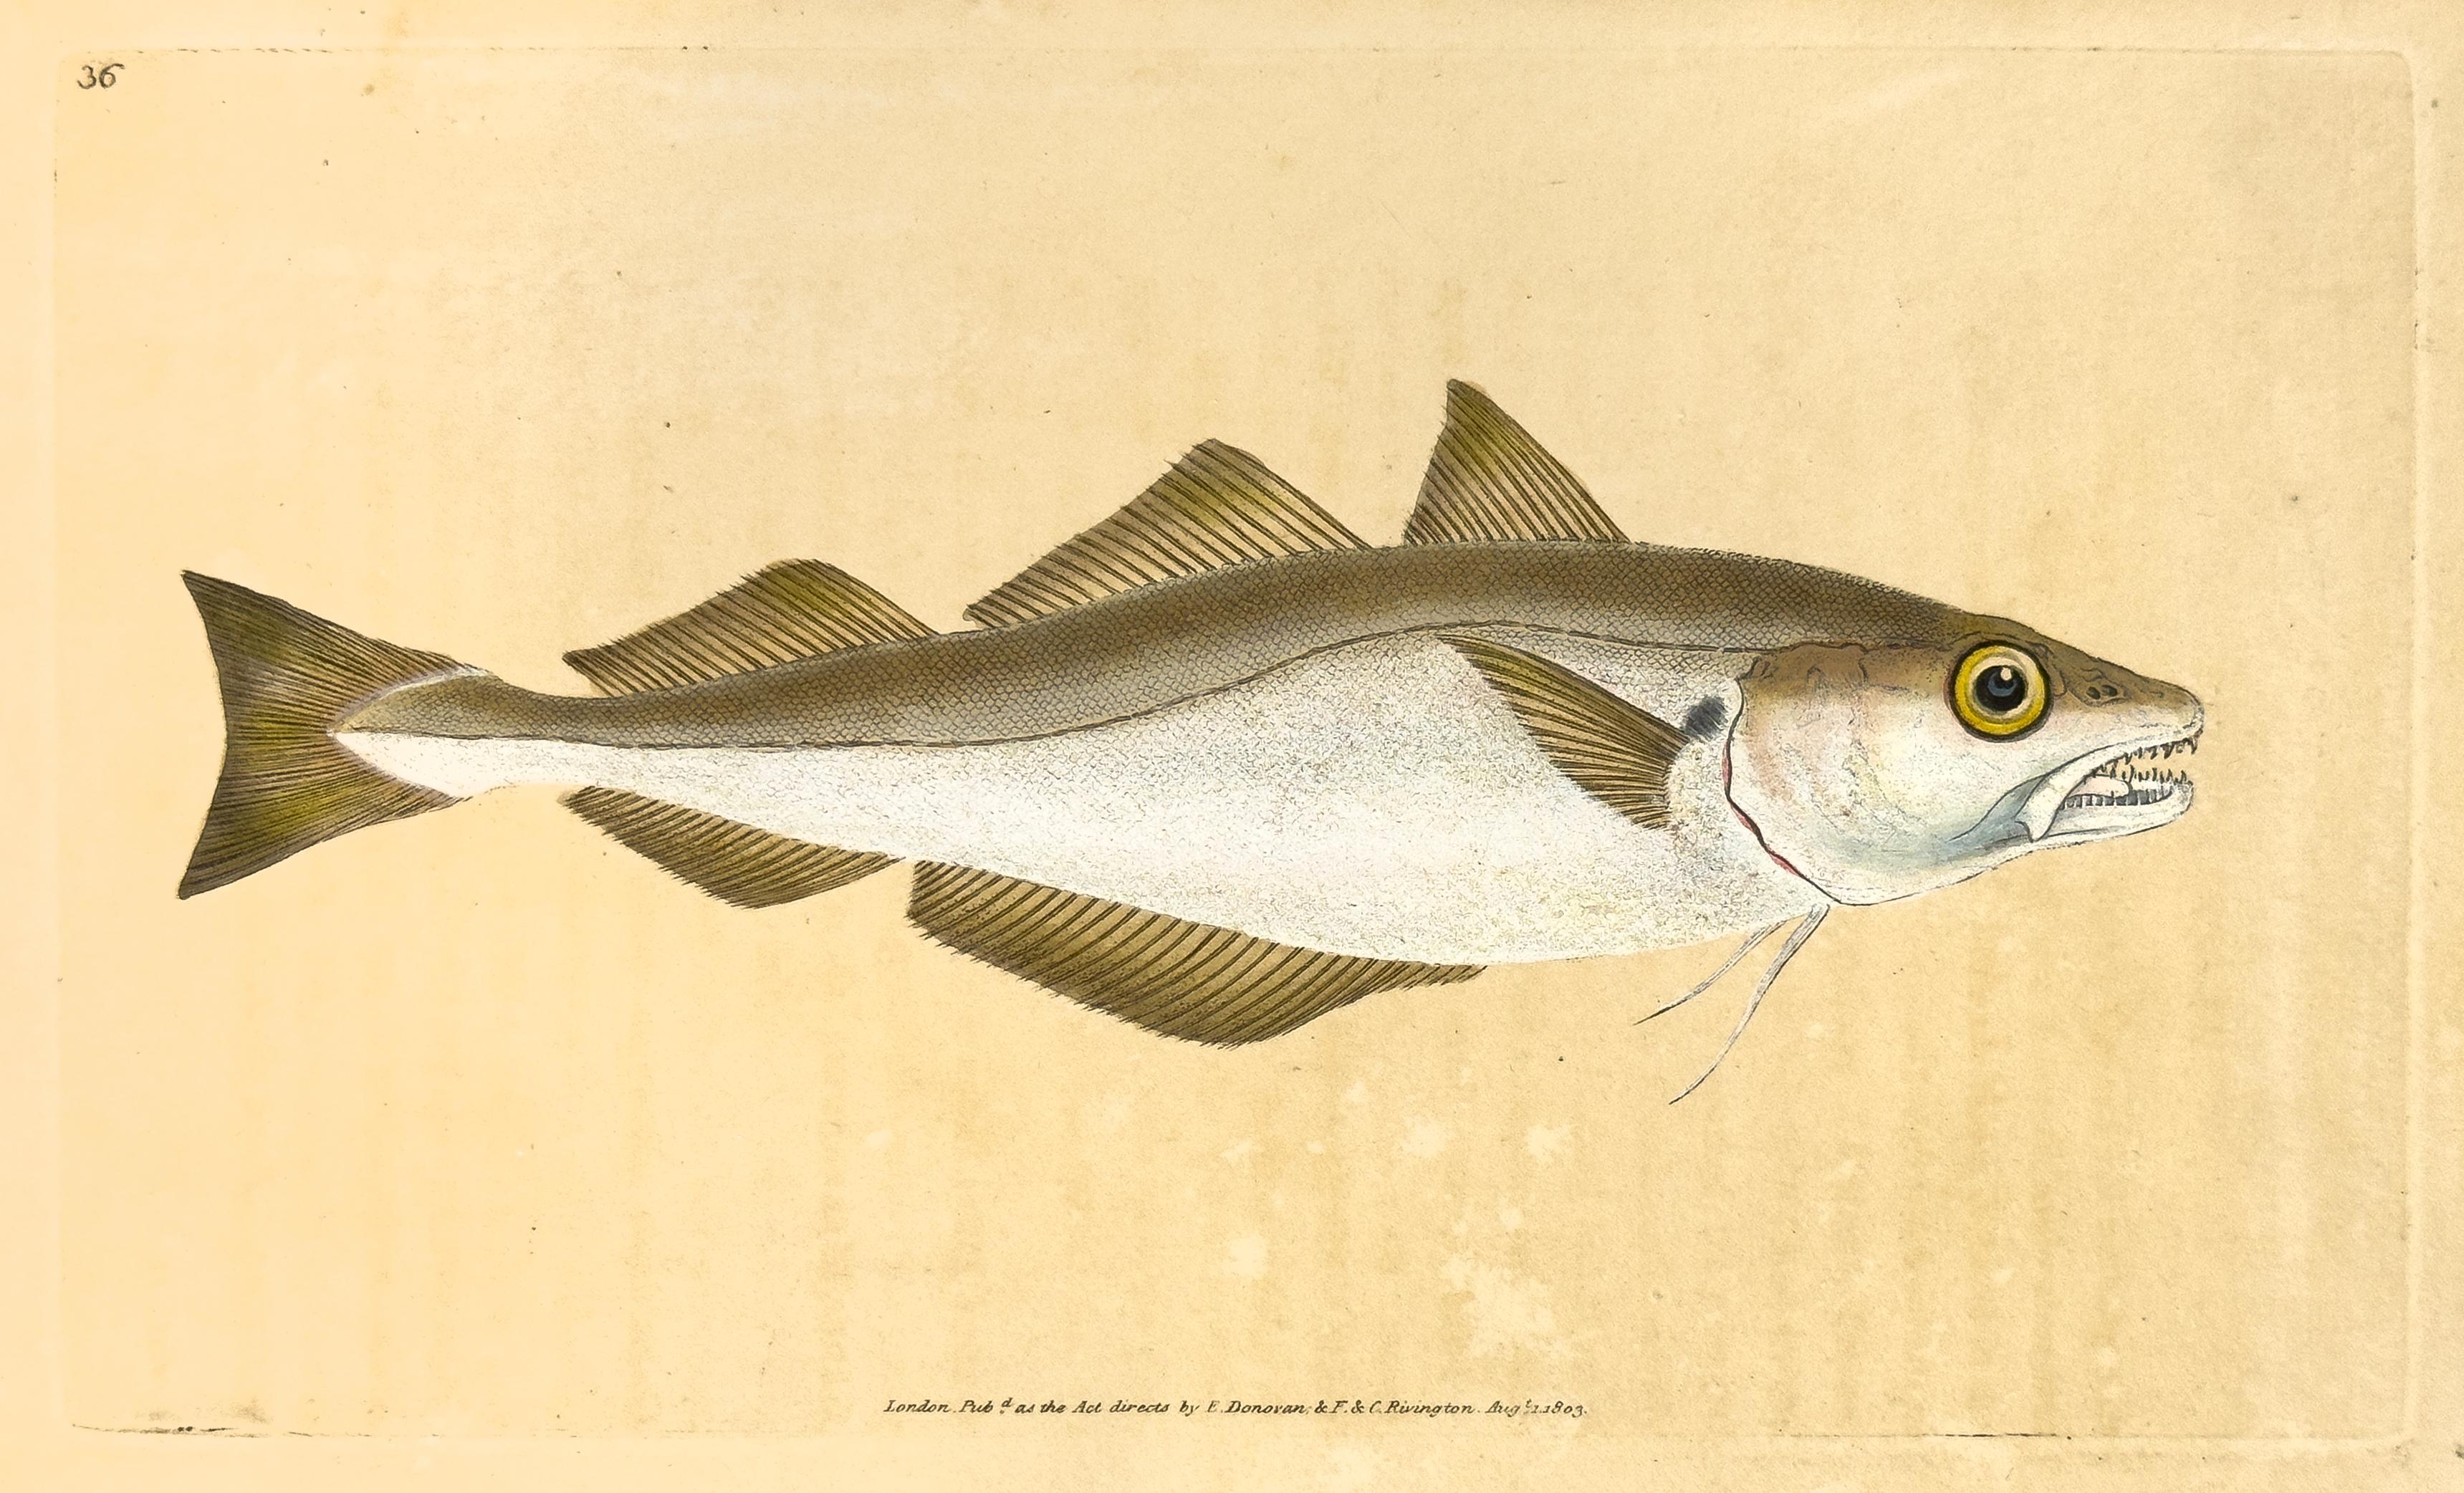 Edward Donovan Print - 36: Gadus merlangus, Whiting